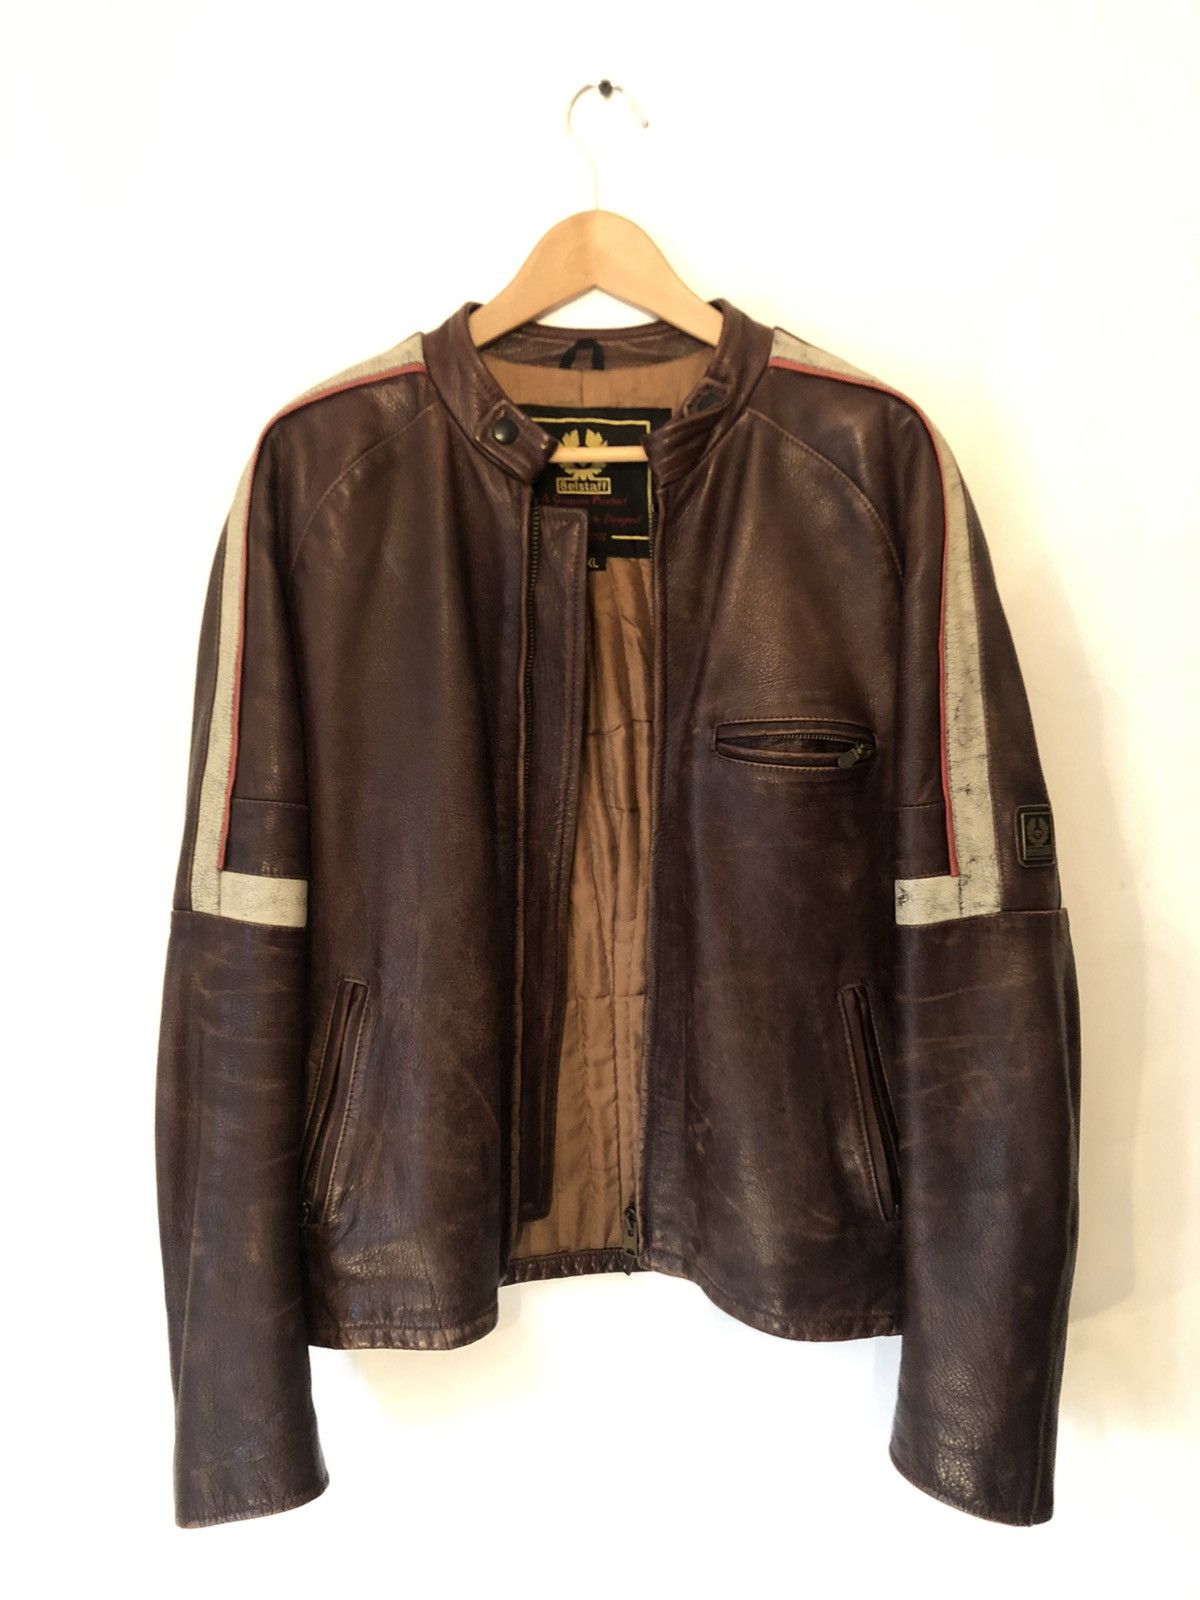 Belstaff Belstaff leather jacket limited edition “War of the worlds” Size US XXL / EU 58 / 5 - 1 Preview